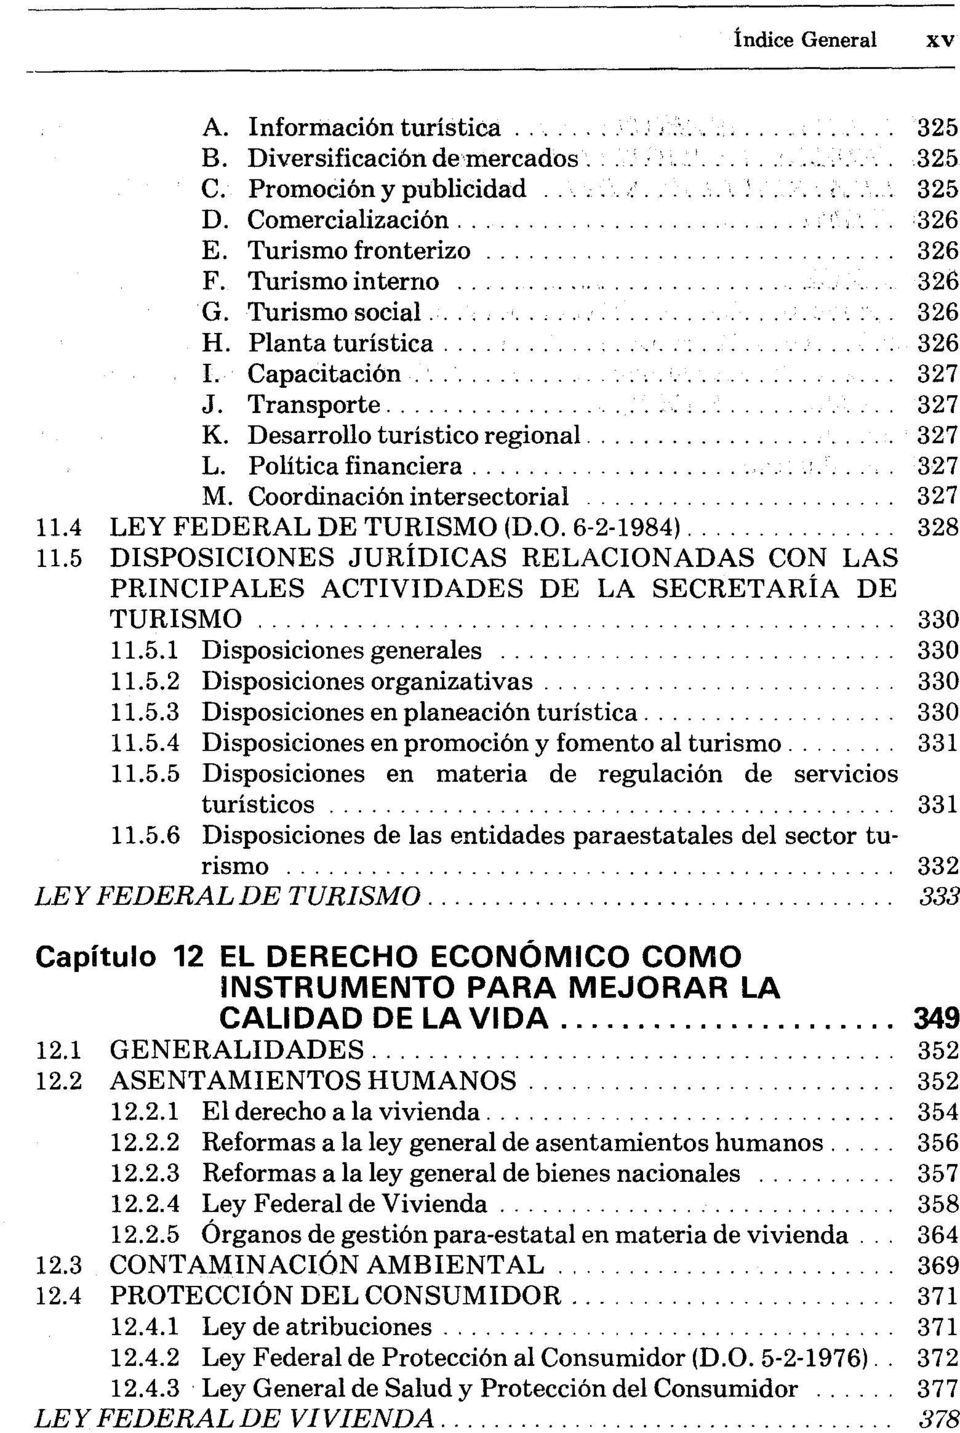 .. 327 L. Politica financiers...... 327 M. Coordination intersectorial... 327 11.4 LEY FEDERAL DE TURISMO (D.O. 6-2-1984)... 328 11.